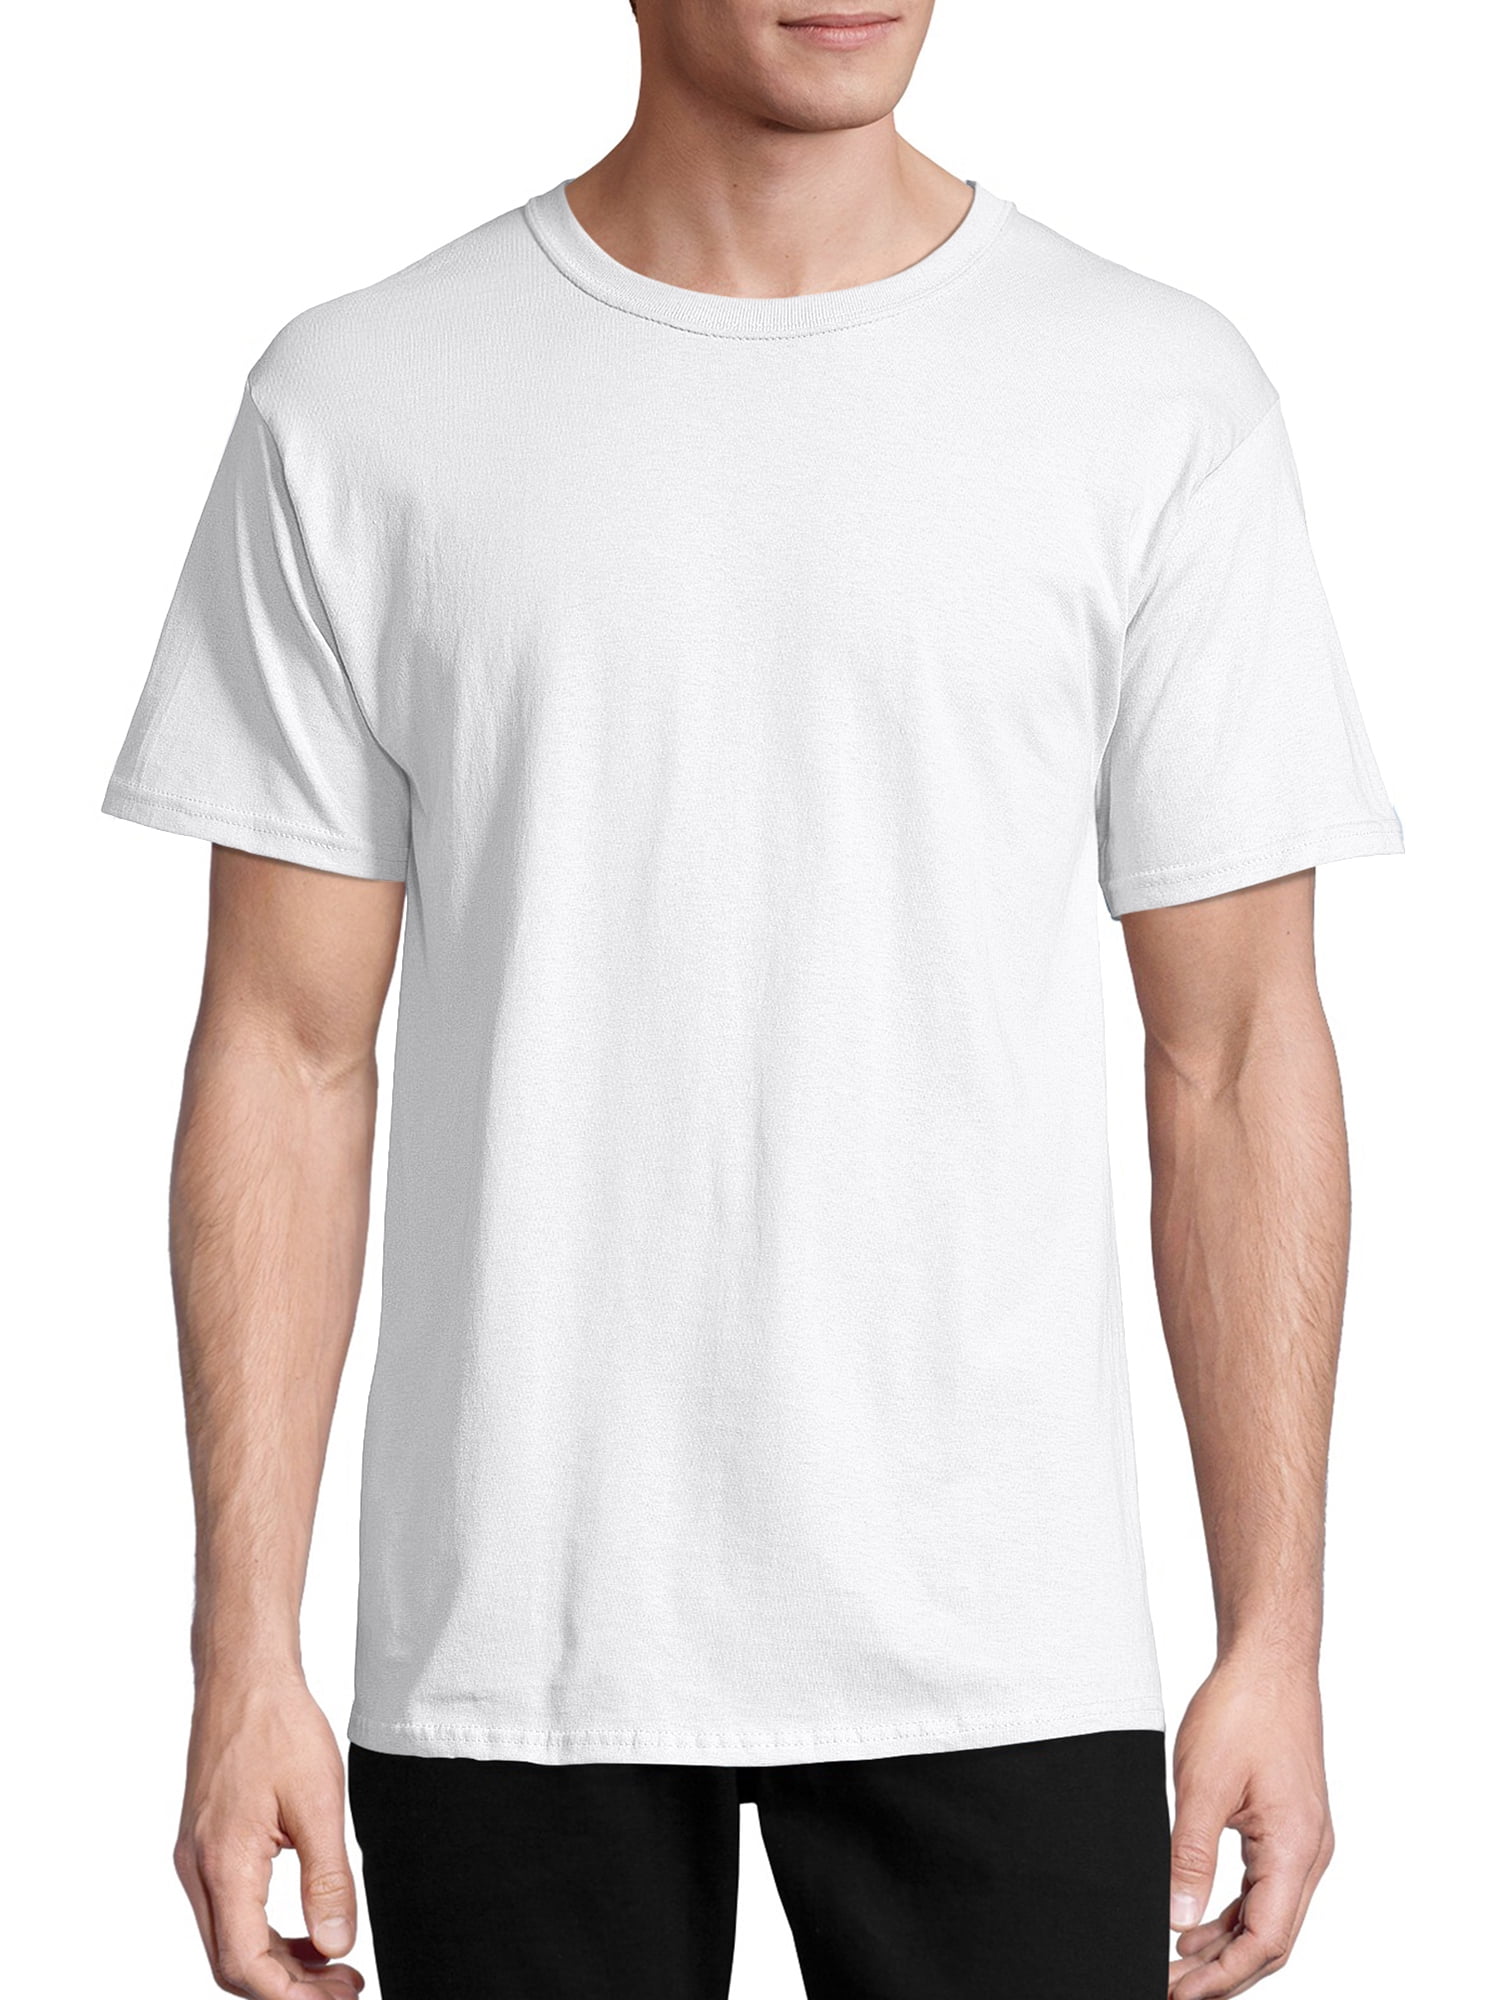 Hanes NEW Men's Size S M L-2XL 3XL 4XL Tees 100% ComfortSoft Cotton T-Shirt 5280 